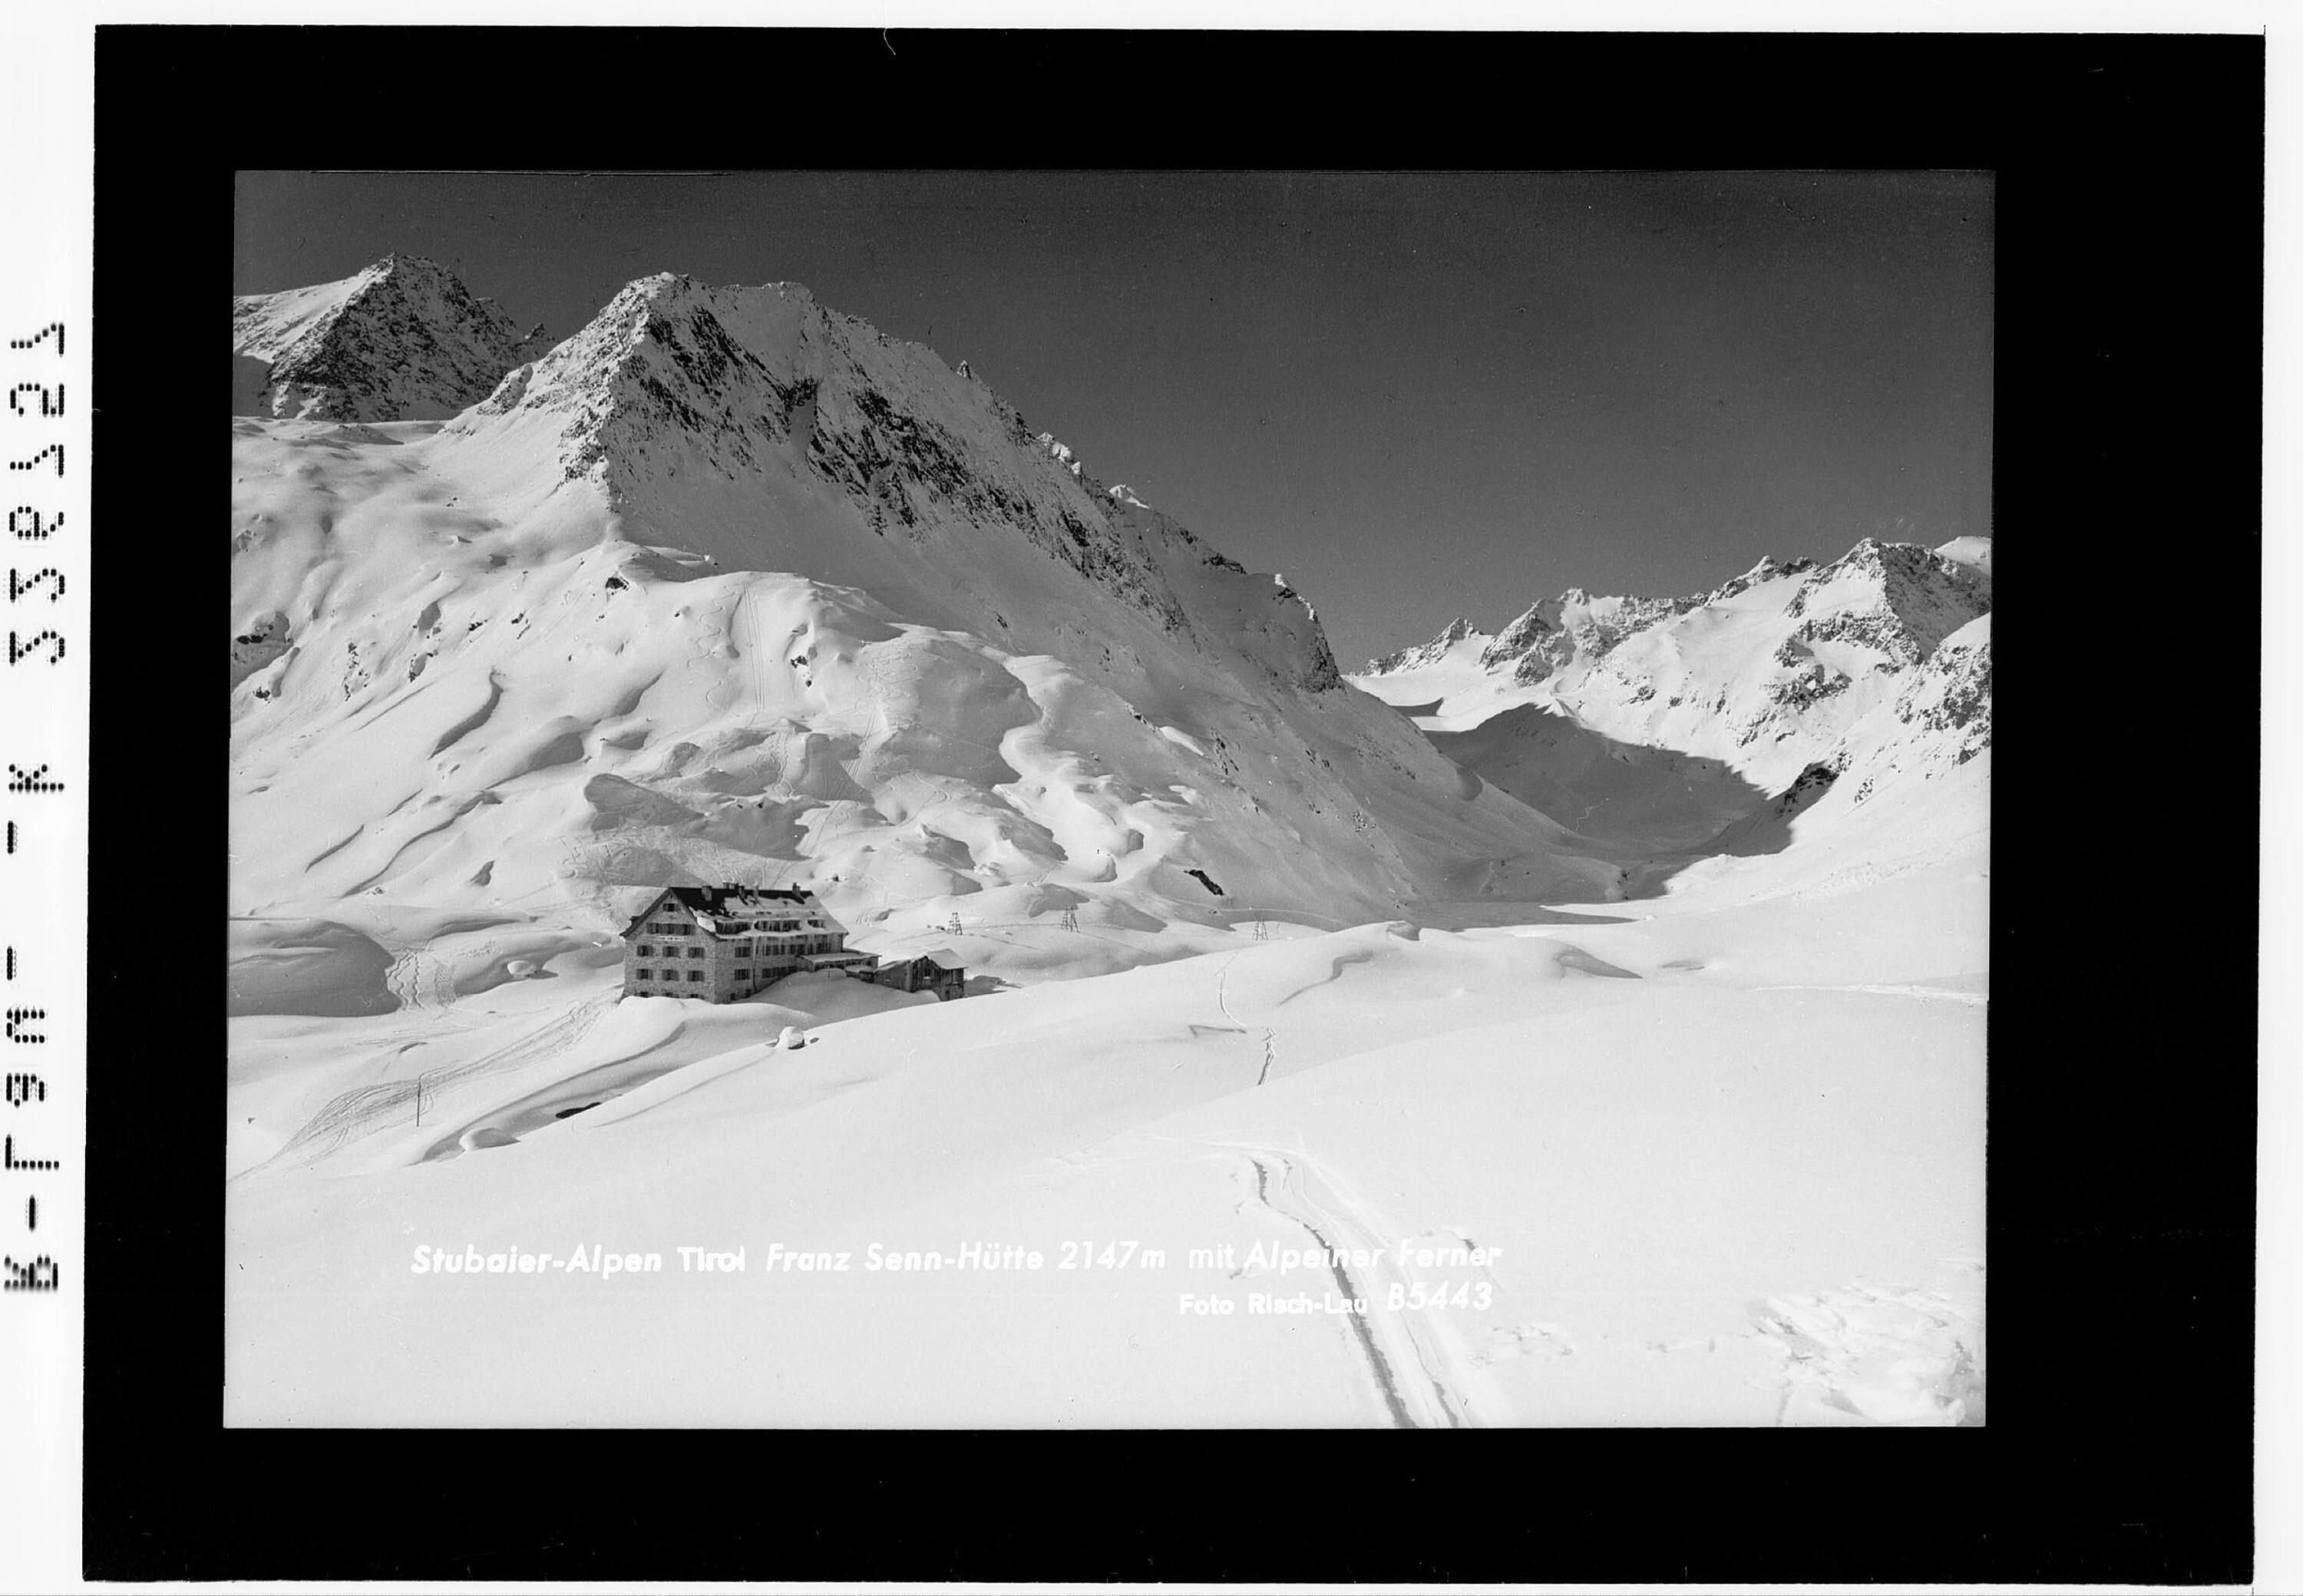 Stubaier Alpen / Tirol / Franz Senn Hütte 2147 m mit Alpeiner Ferner></div>


    <hr>
    <div class=